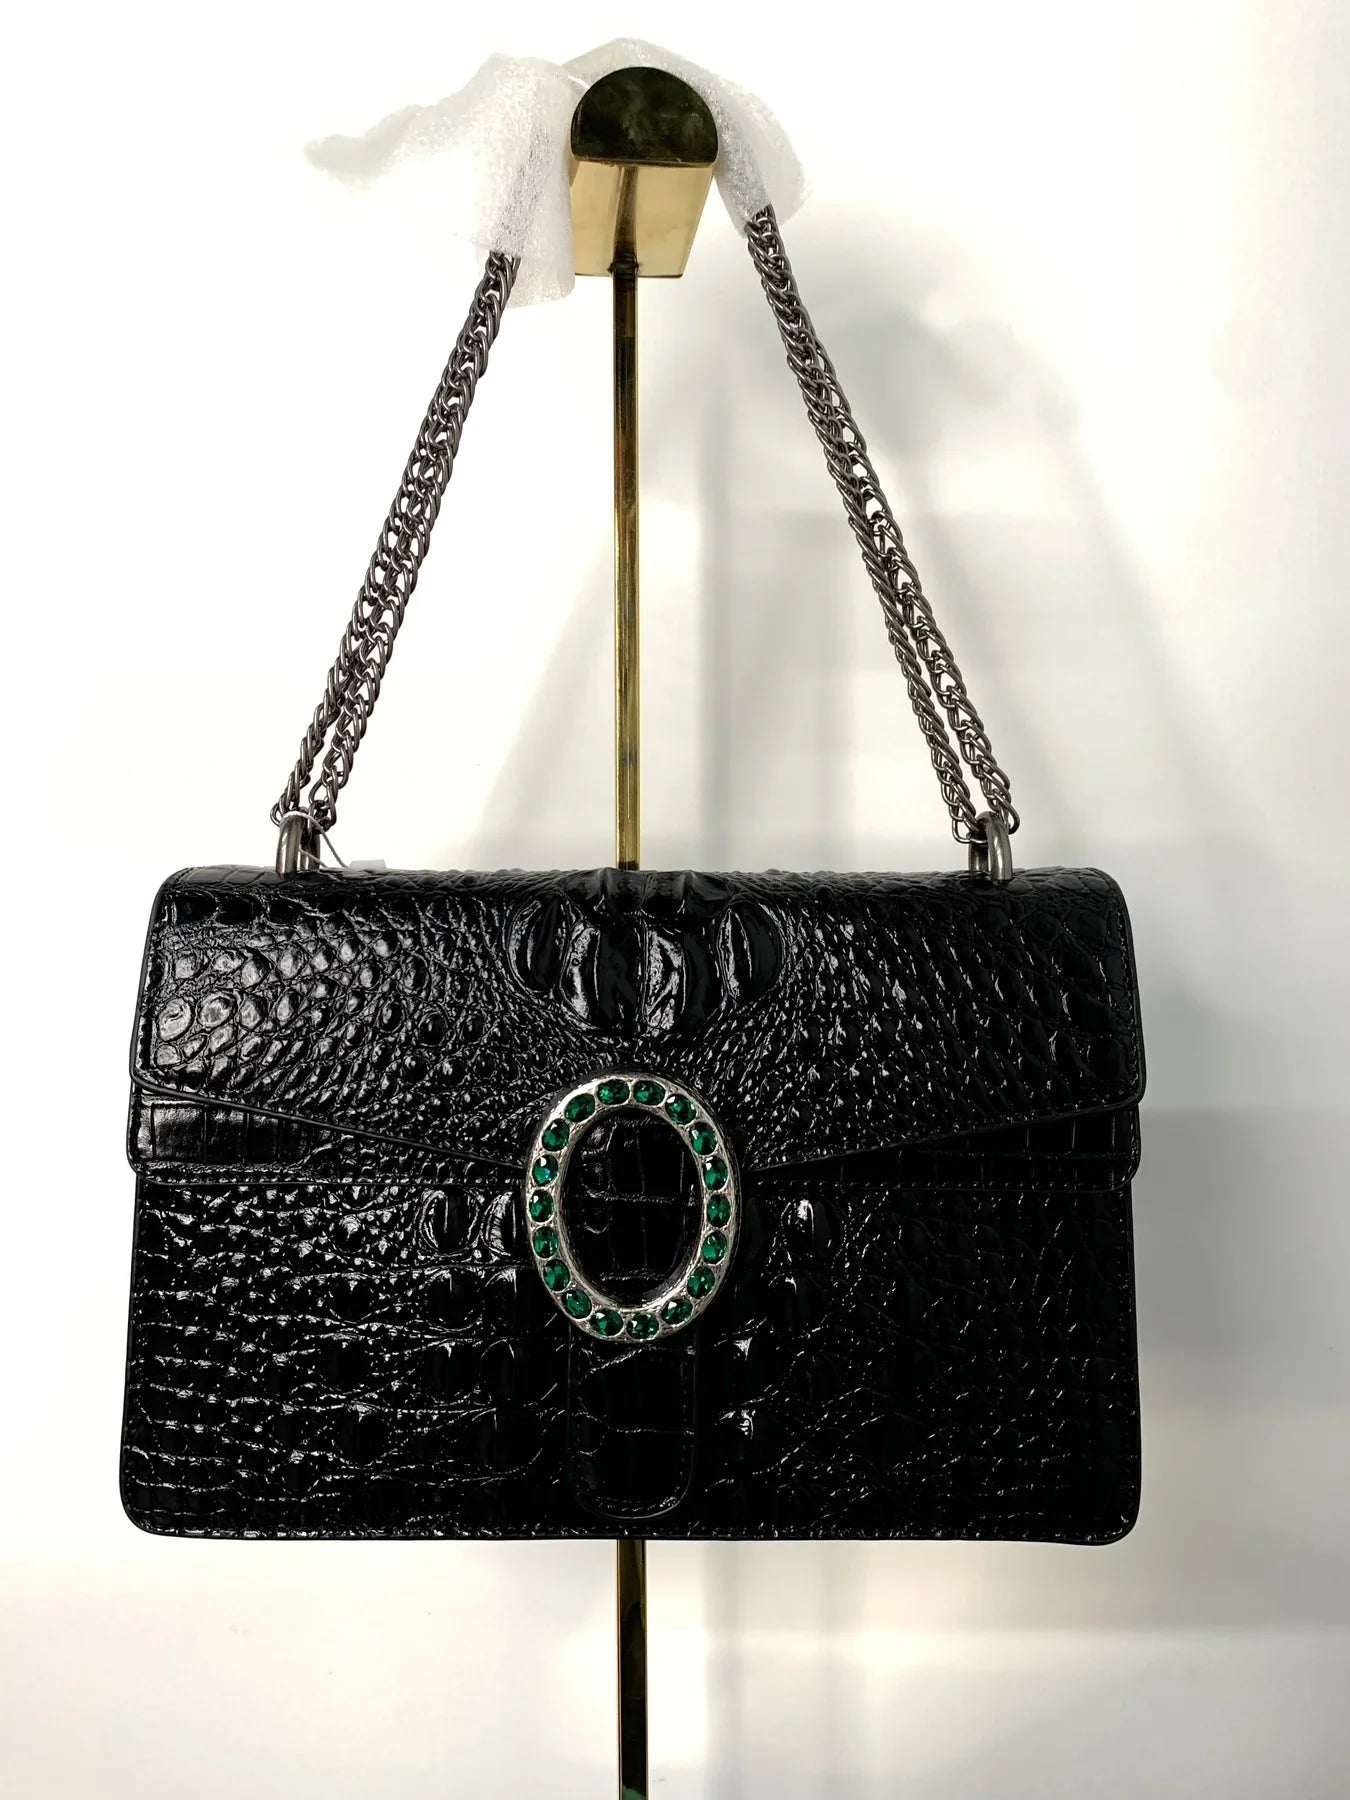 $219.99]Any 1 Bag+Any 1 Set Bags-Black Alligator Bag